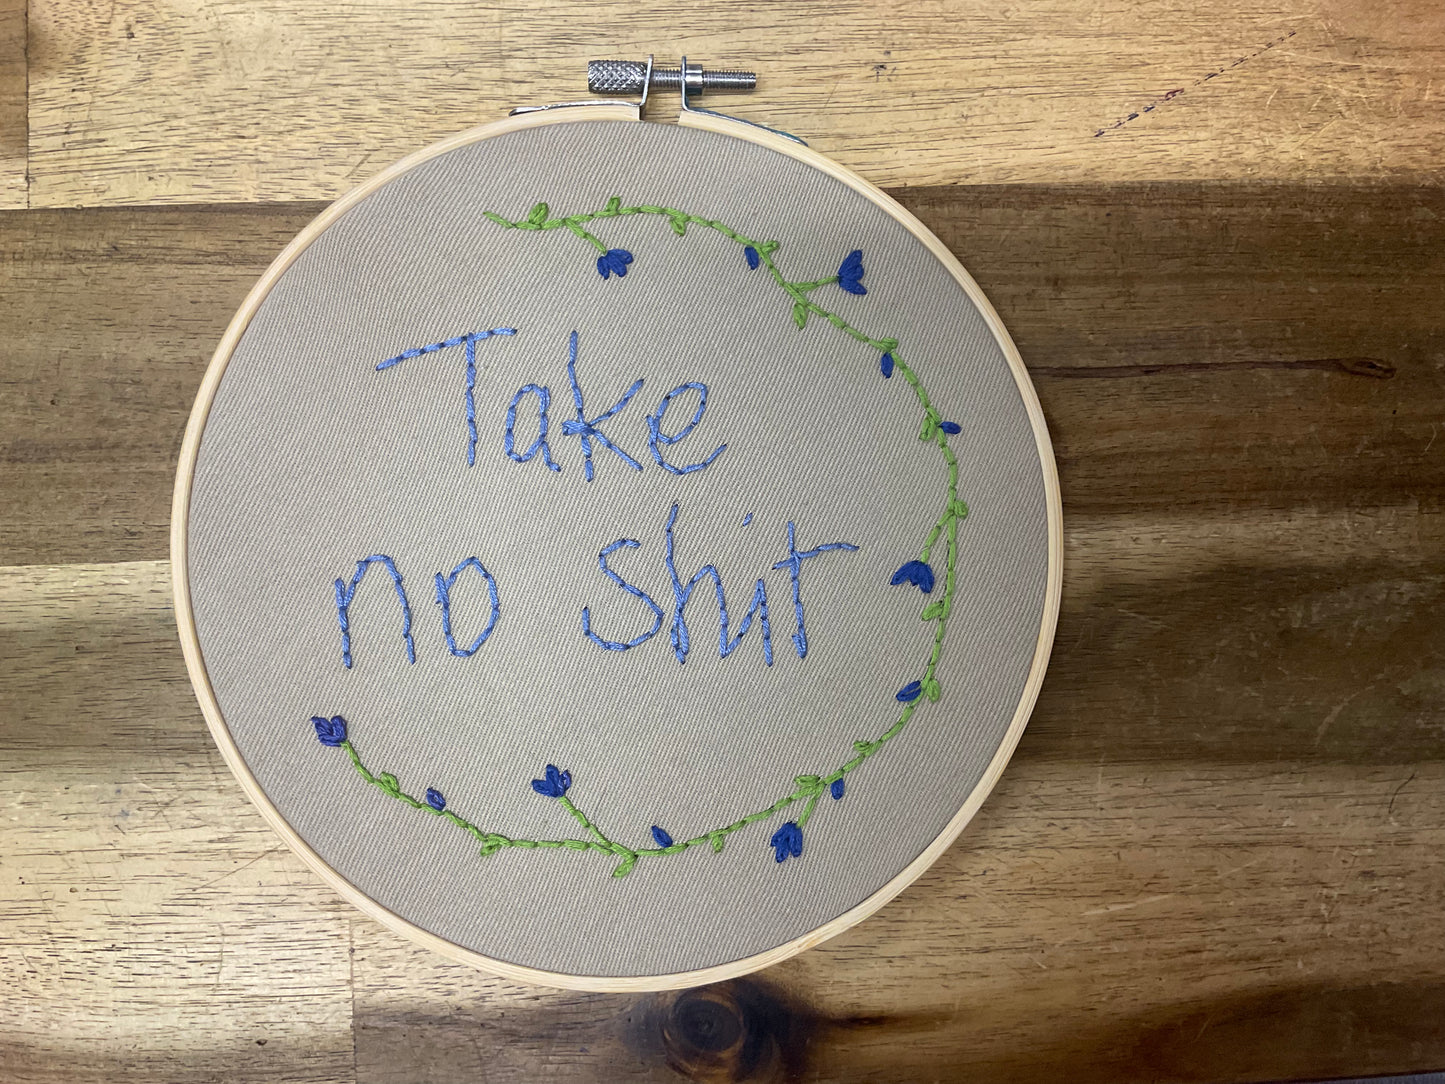 Naughty Corner Embroidery - Take No Sh*t 15cm